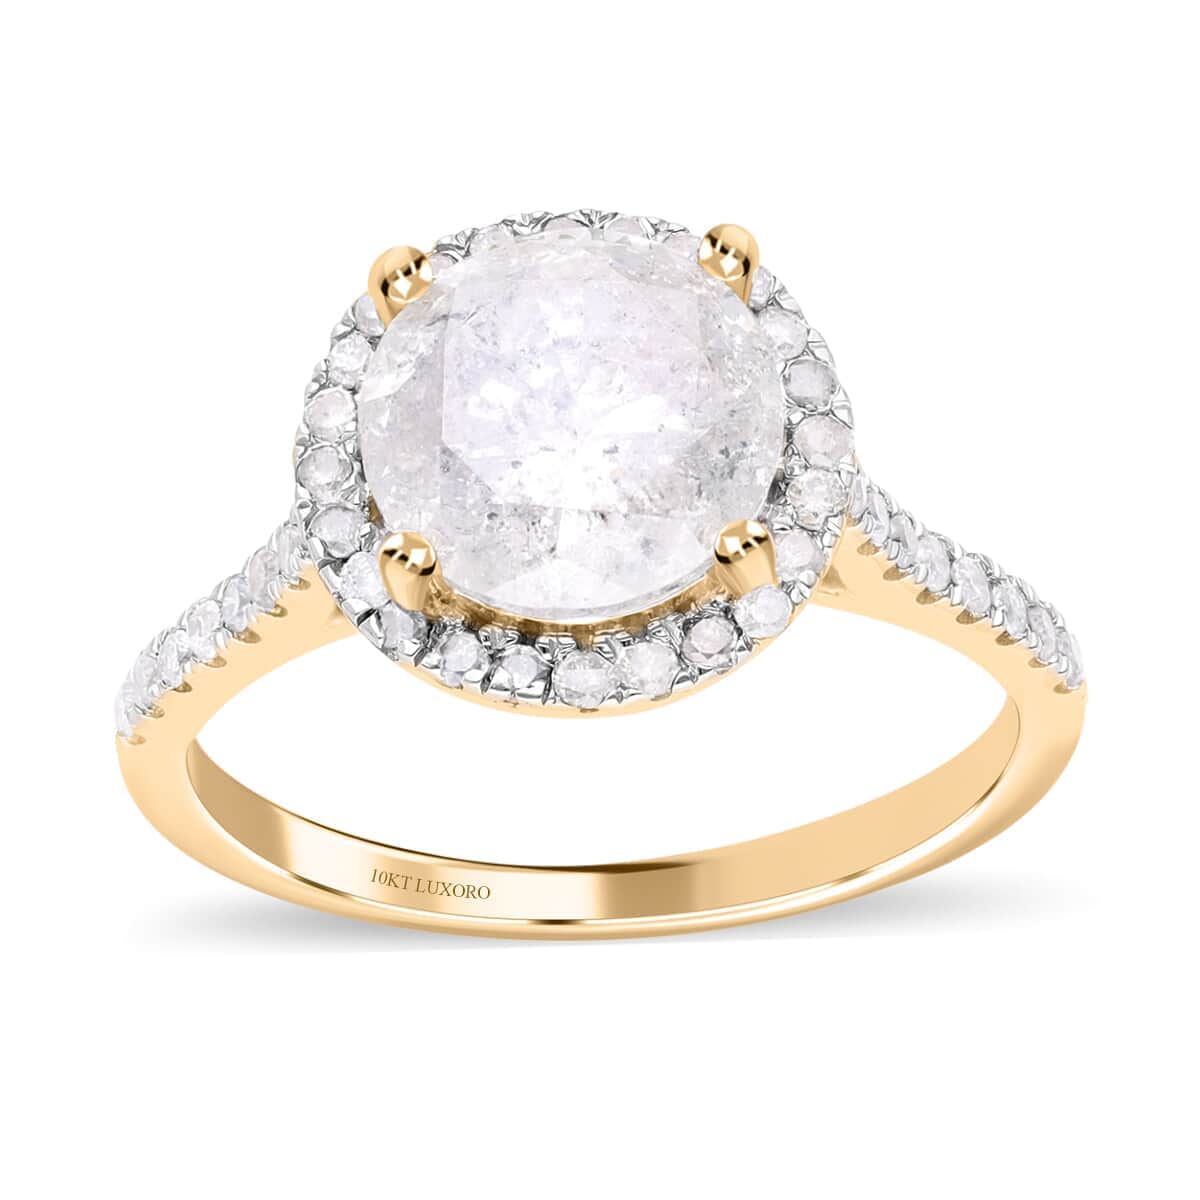 Luxoro 10K Yellow Gold Diamond (G-H, I3) Halo Ring (Size 10.0) 3.50 ctw image number 0